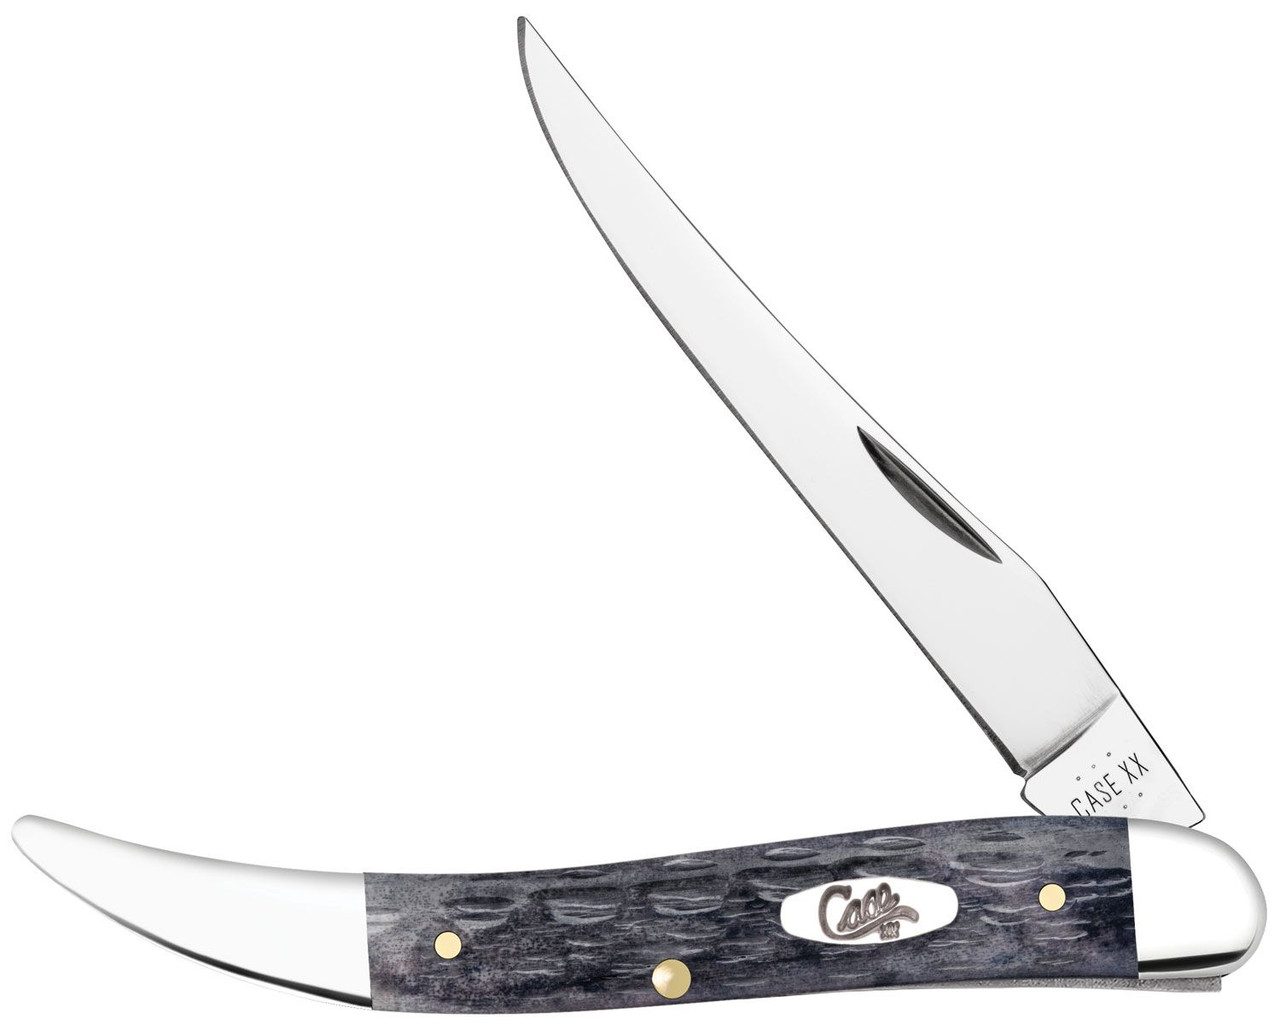 Case Medium Texas Toothpick 58421- Chrome Vanadium Carbon Steel Long Clip Blade, Pocket Worn Crandall Jig Gray Bone Handle (610094 CS)